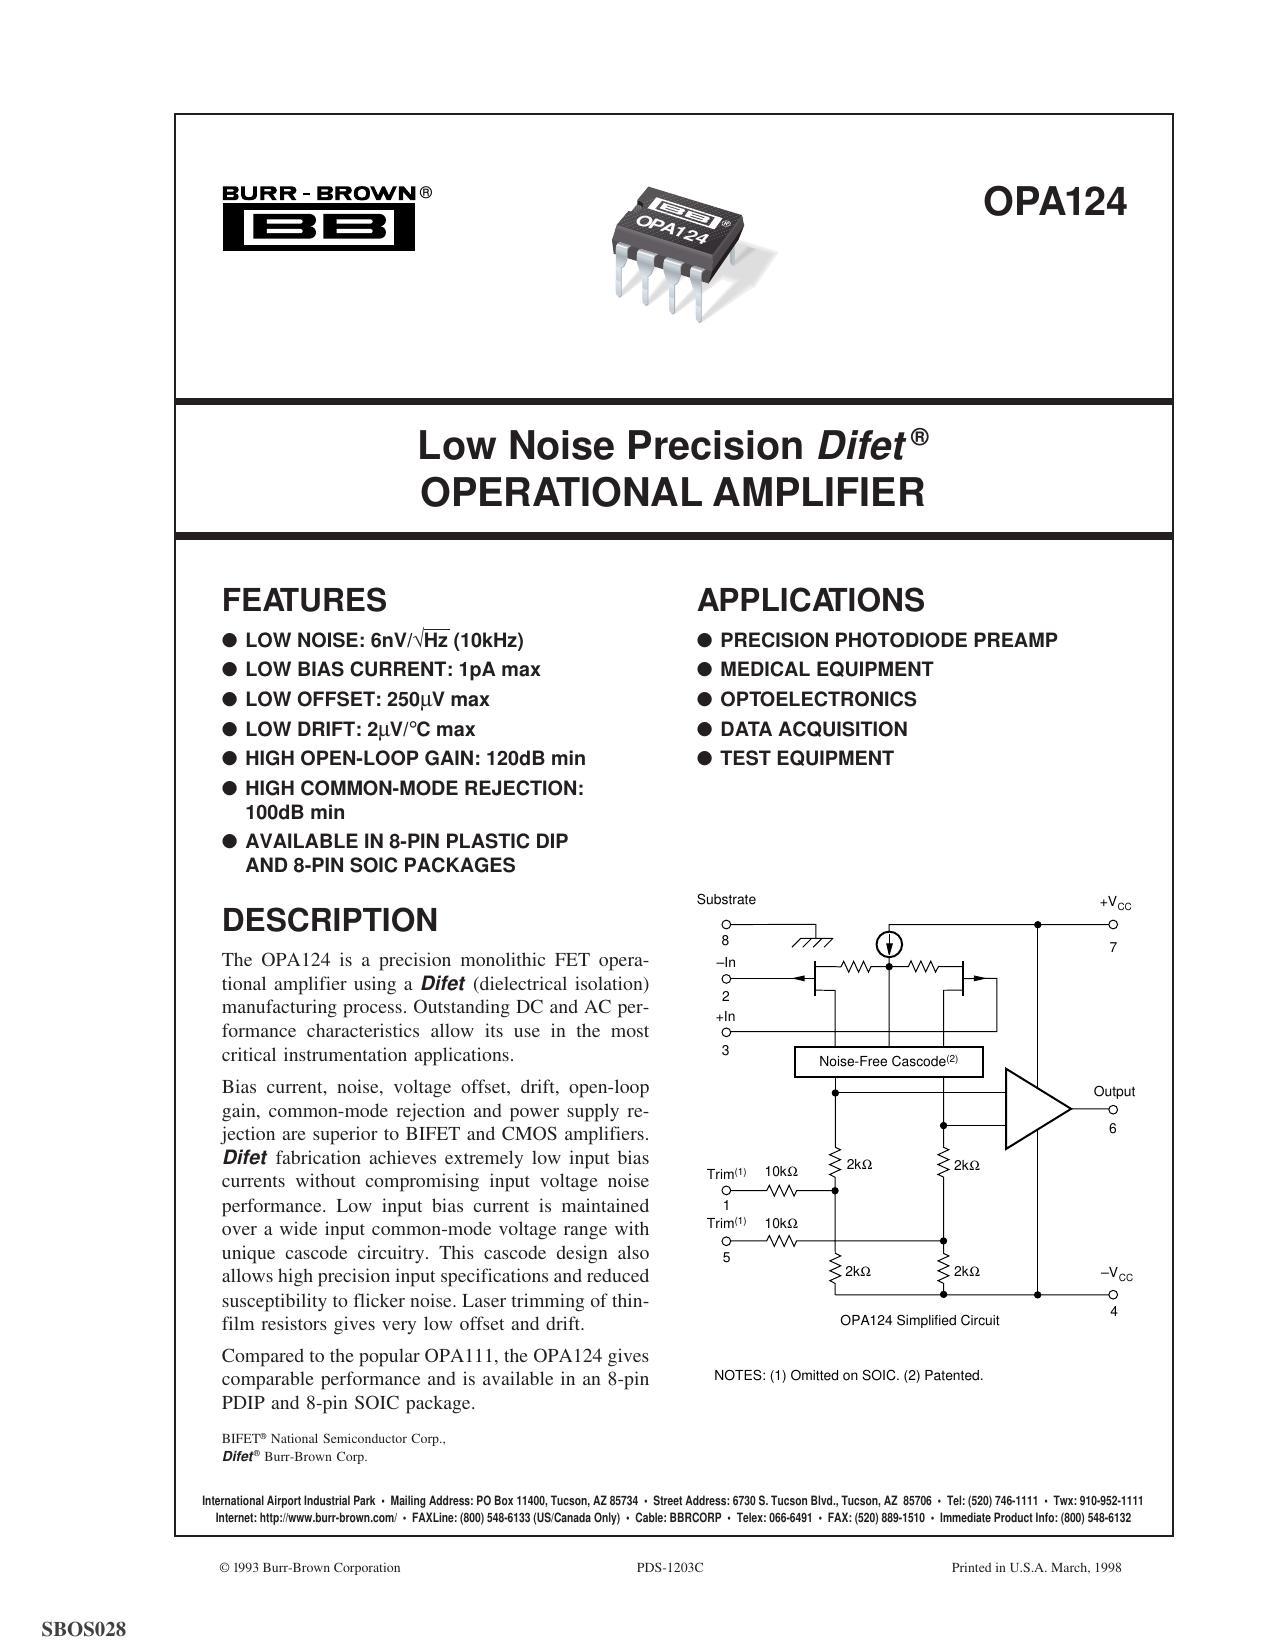 opa124-low-noise-precision-difet-operational-amplifier.pdf